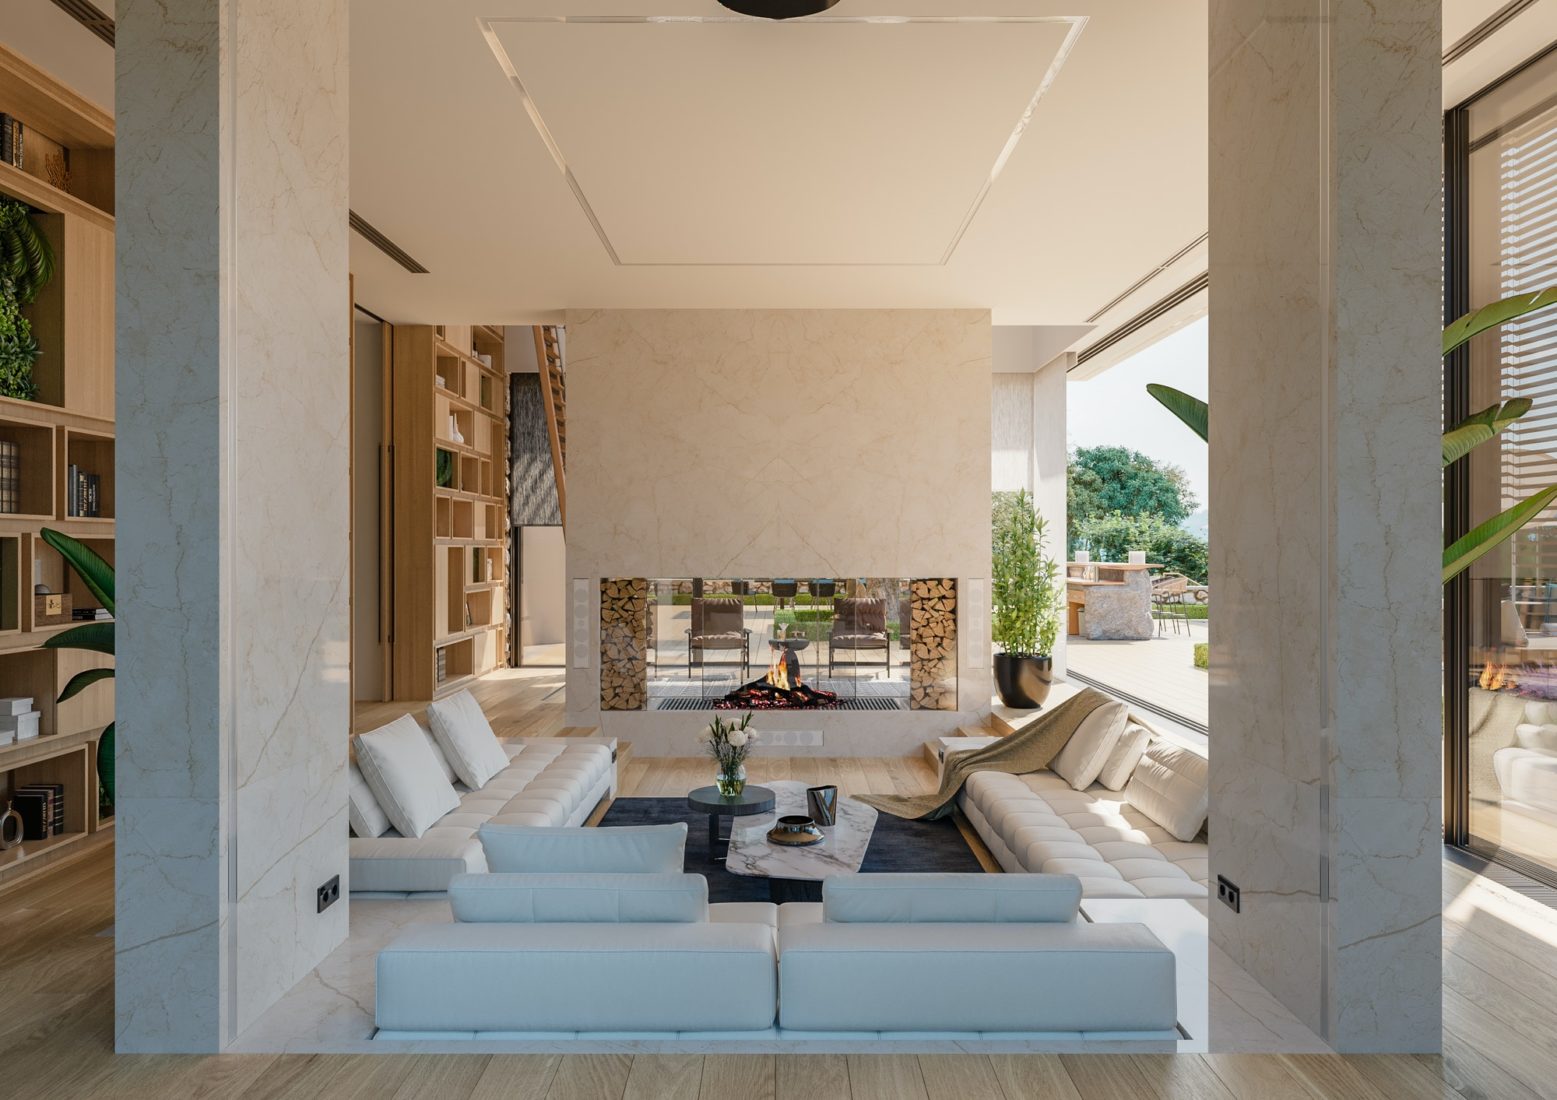 Mediterranean Villa interior and exterior design